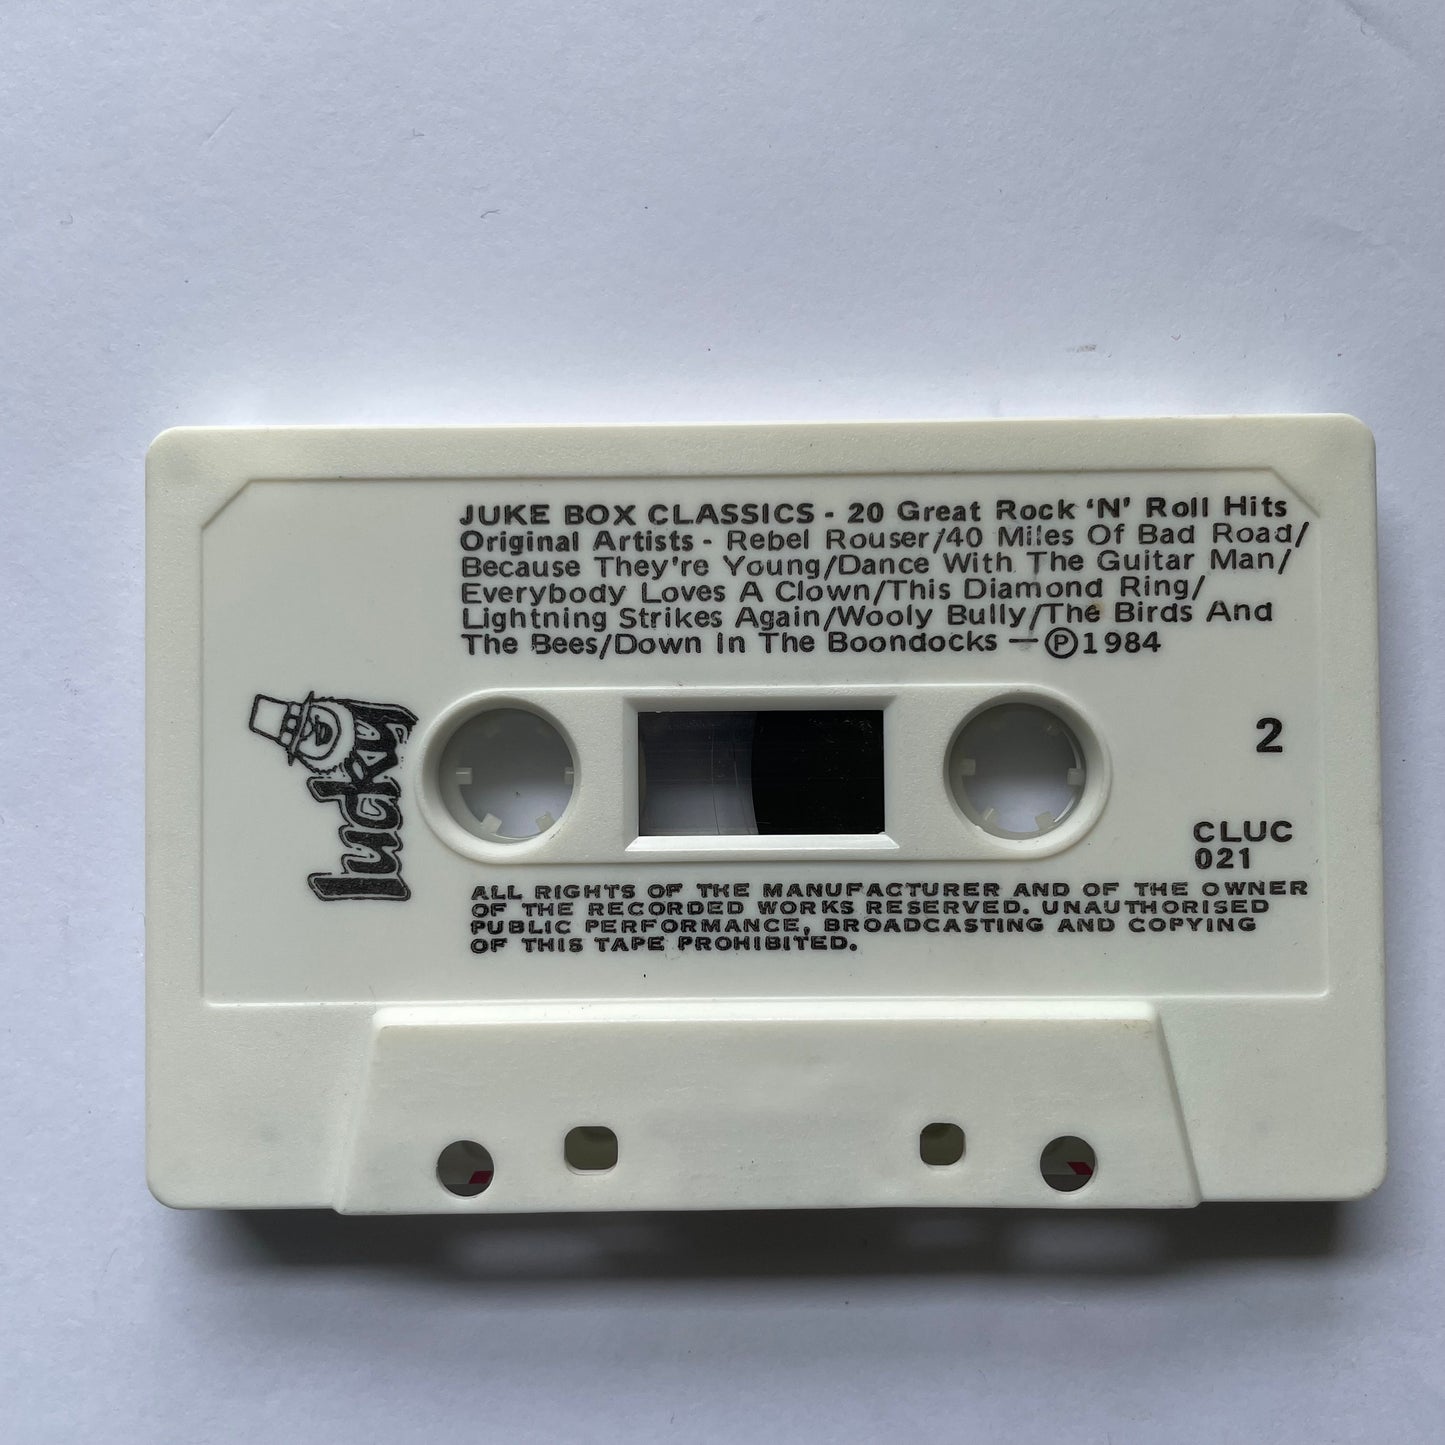 Tape Cassette Juke Box Classics 20 Greats Rock ‘n’ Roll Classics side 2 